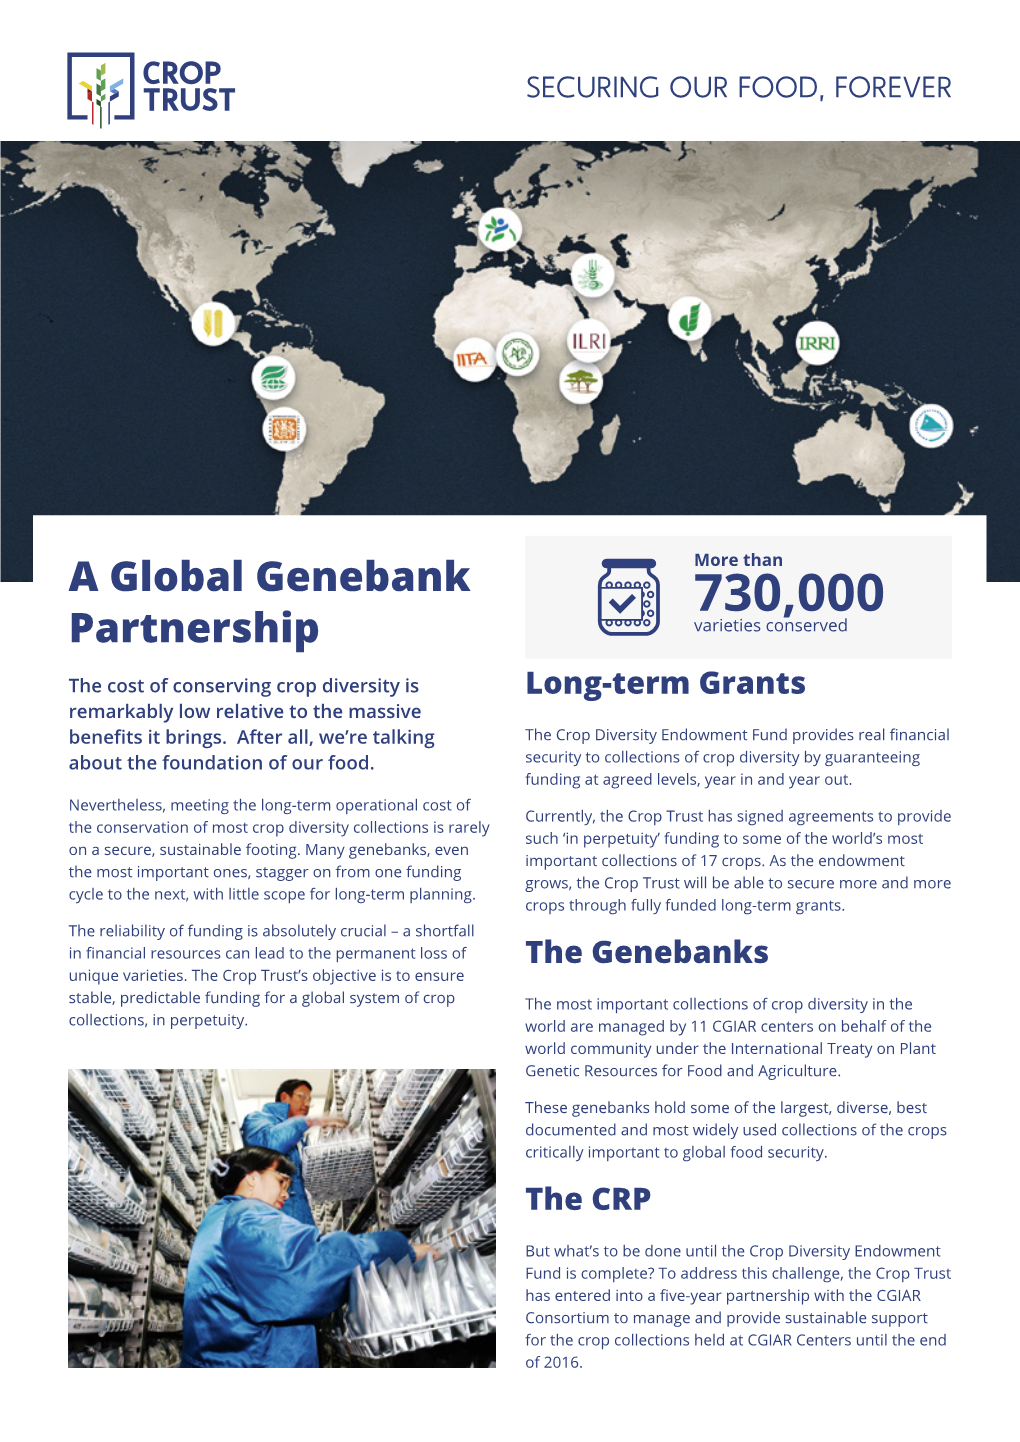 A Global Genebank Partnership